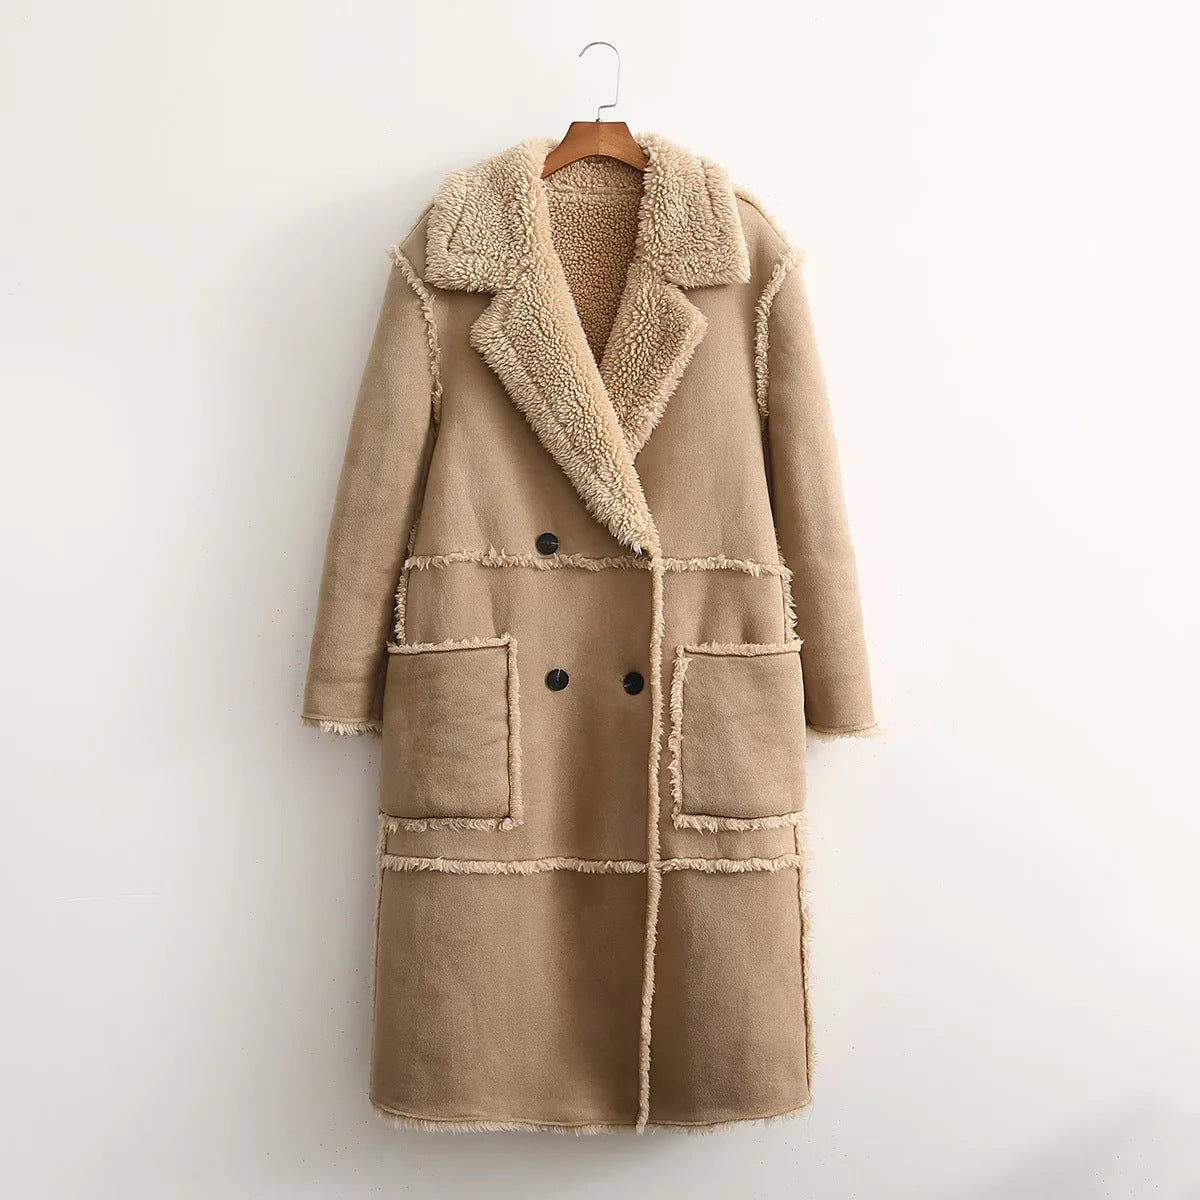 Personality Stitching Fleece Coat Coat Autumn And Winter Women's